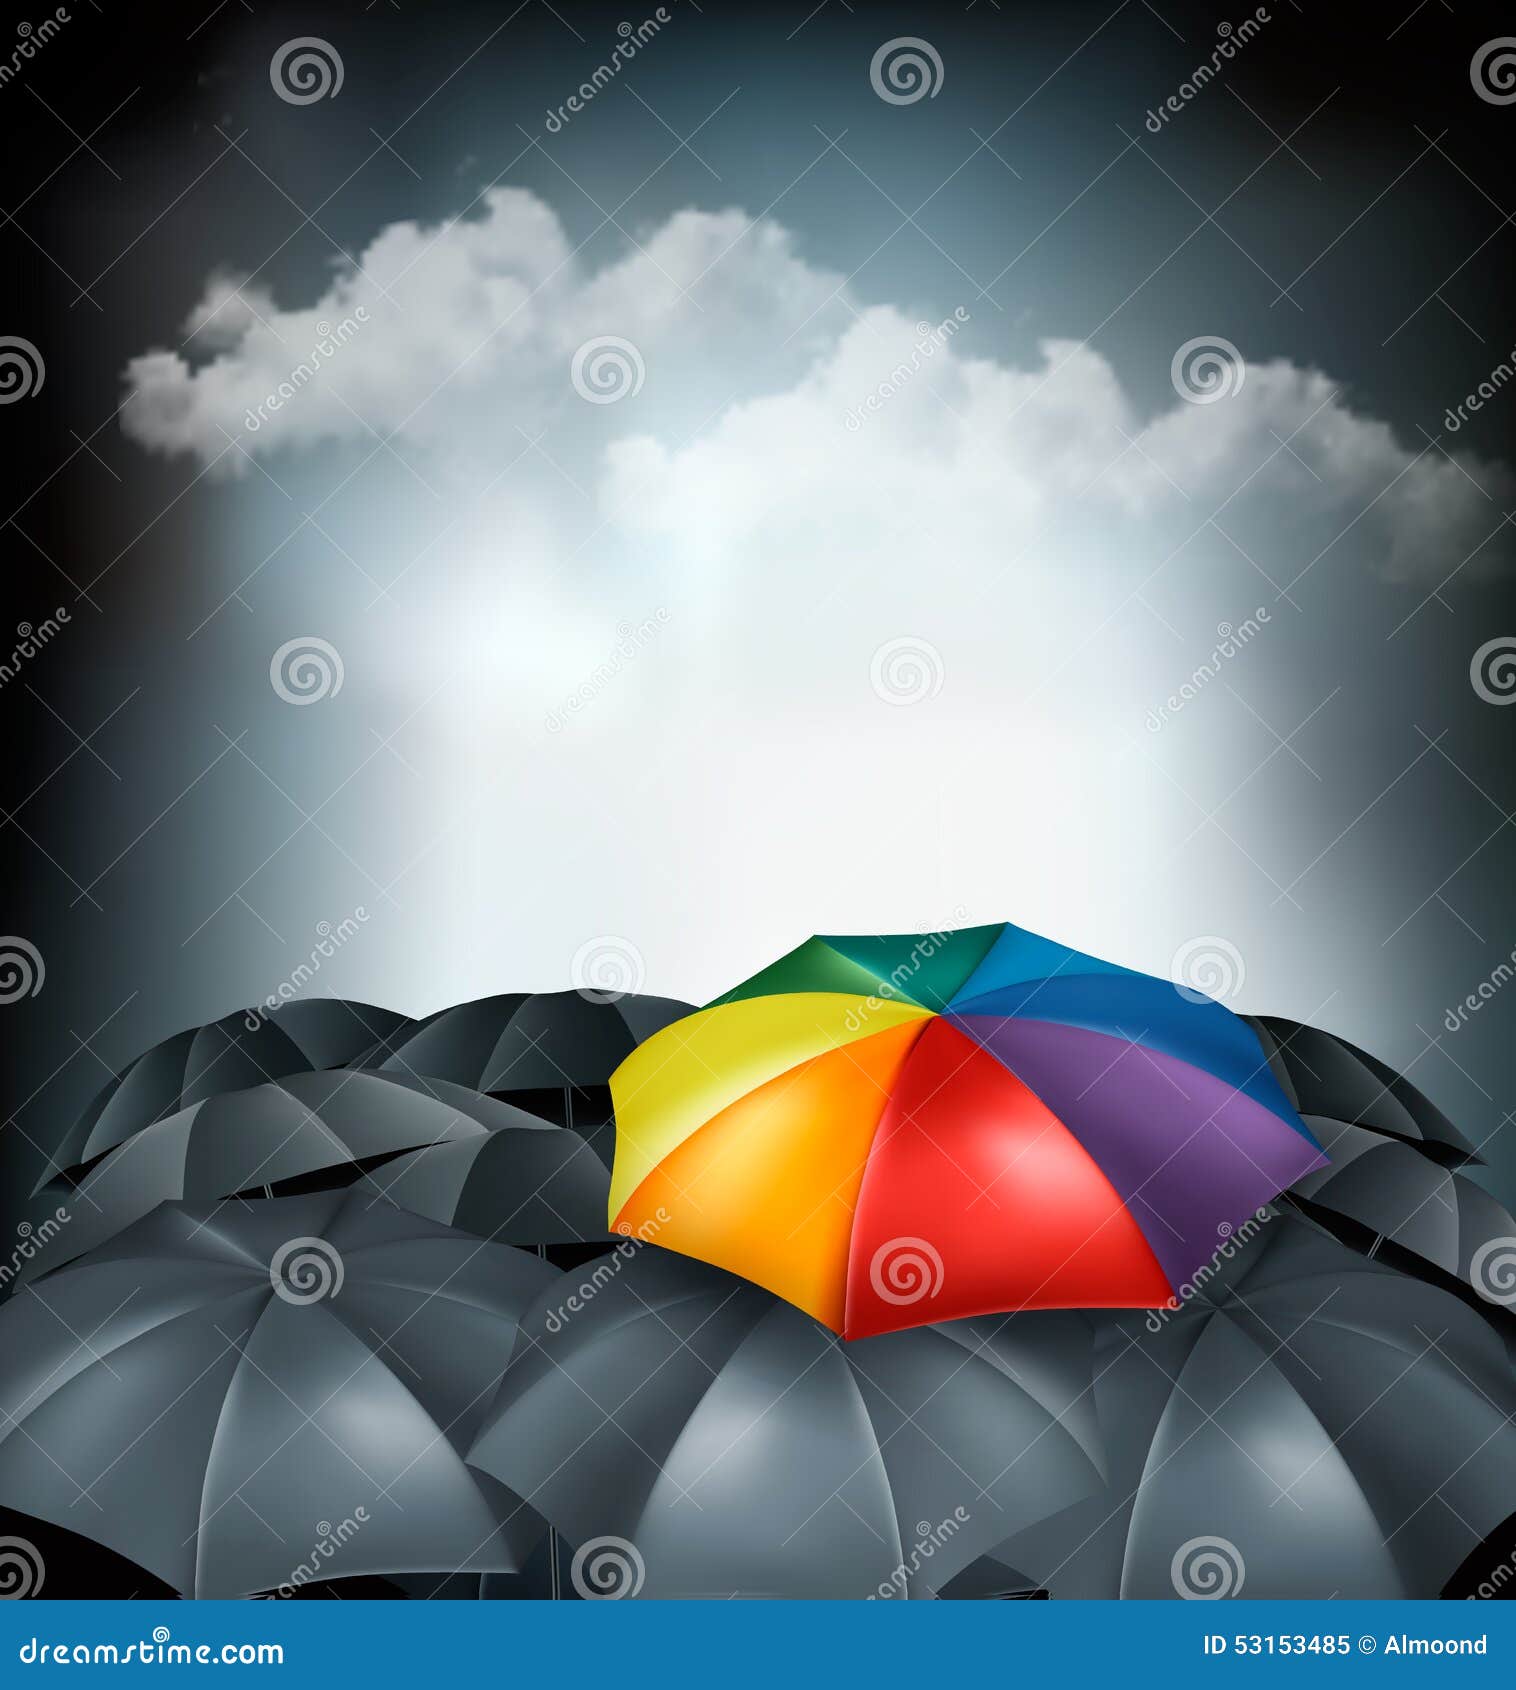 a rainbow umbrella amongst grey ones. uniqueness concept.